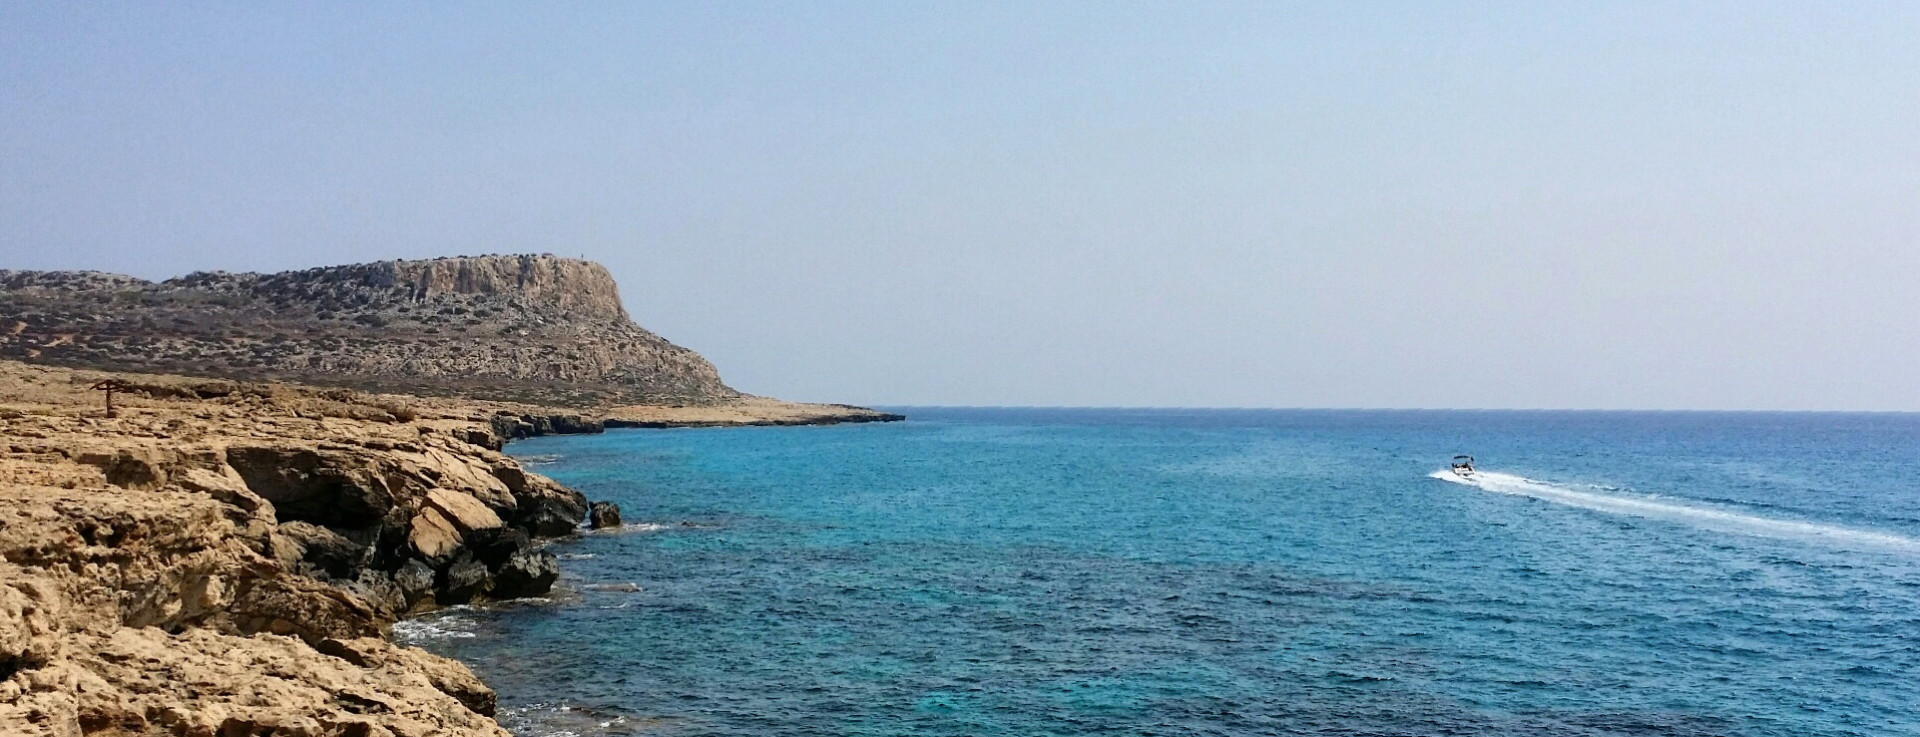 Cyprus shore